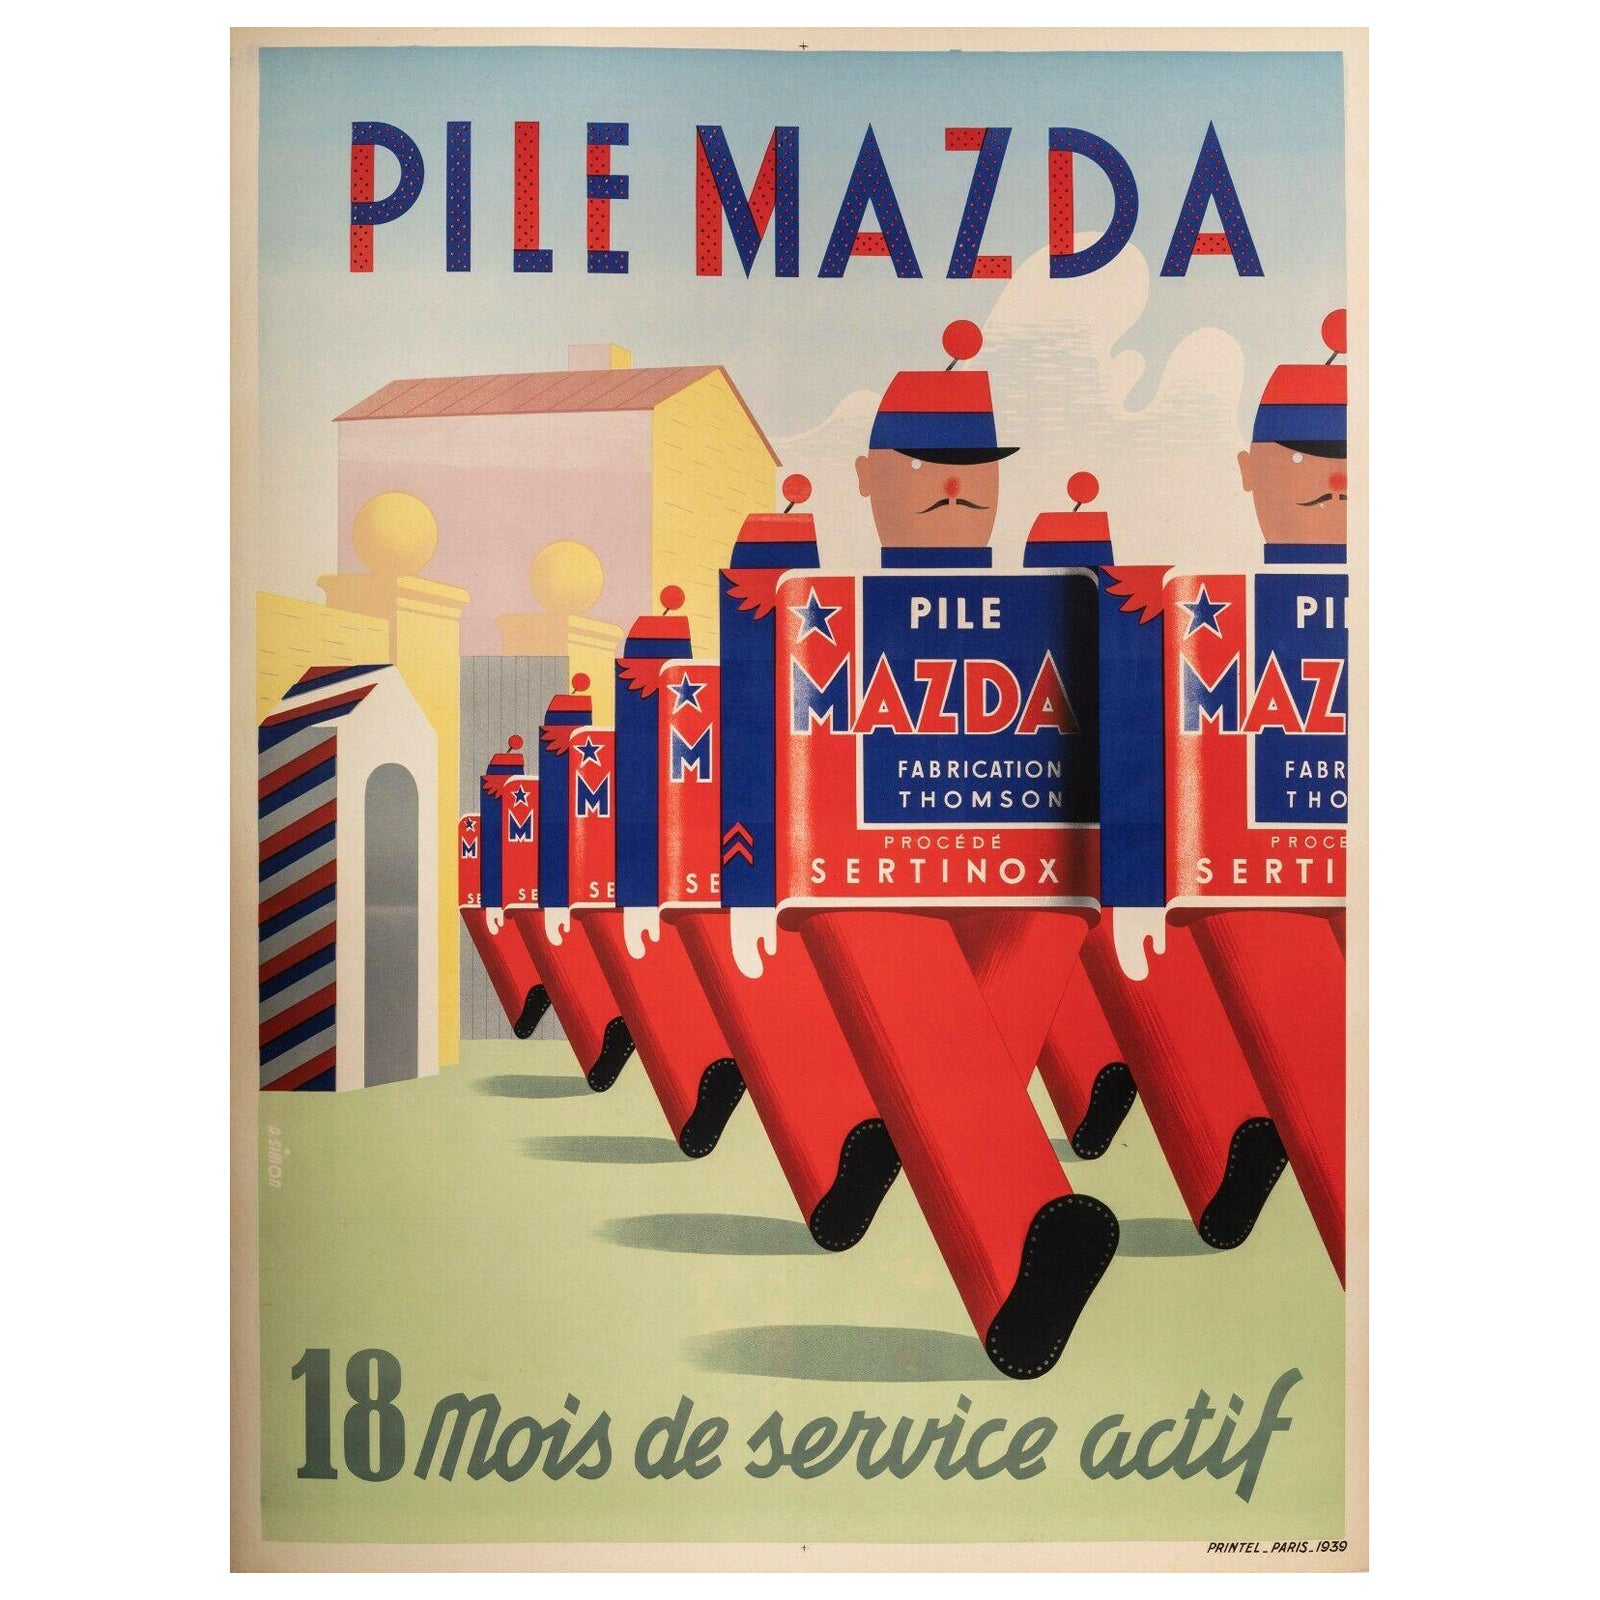 Original Vintage Poster-Simon A. Mazda-Thomson-Electric Battery, 1939 For Sale